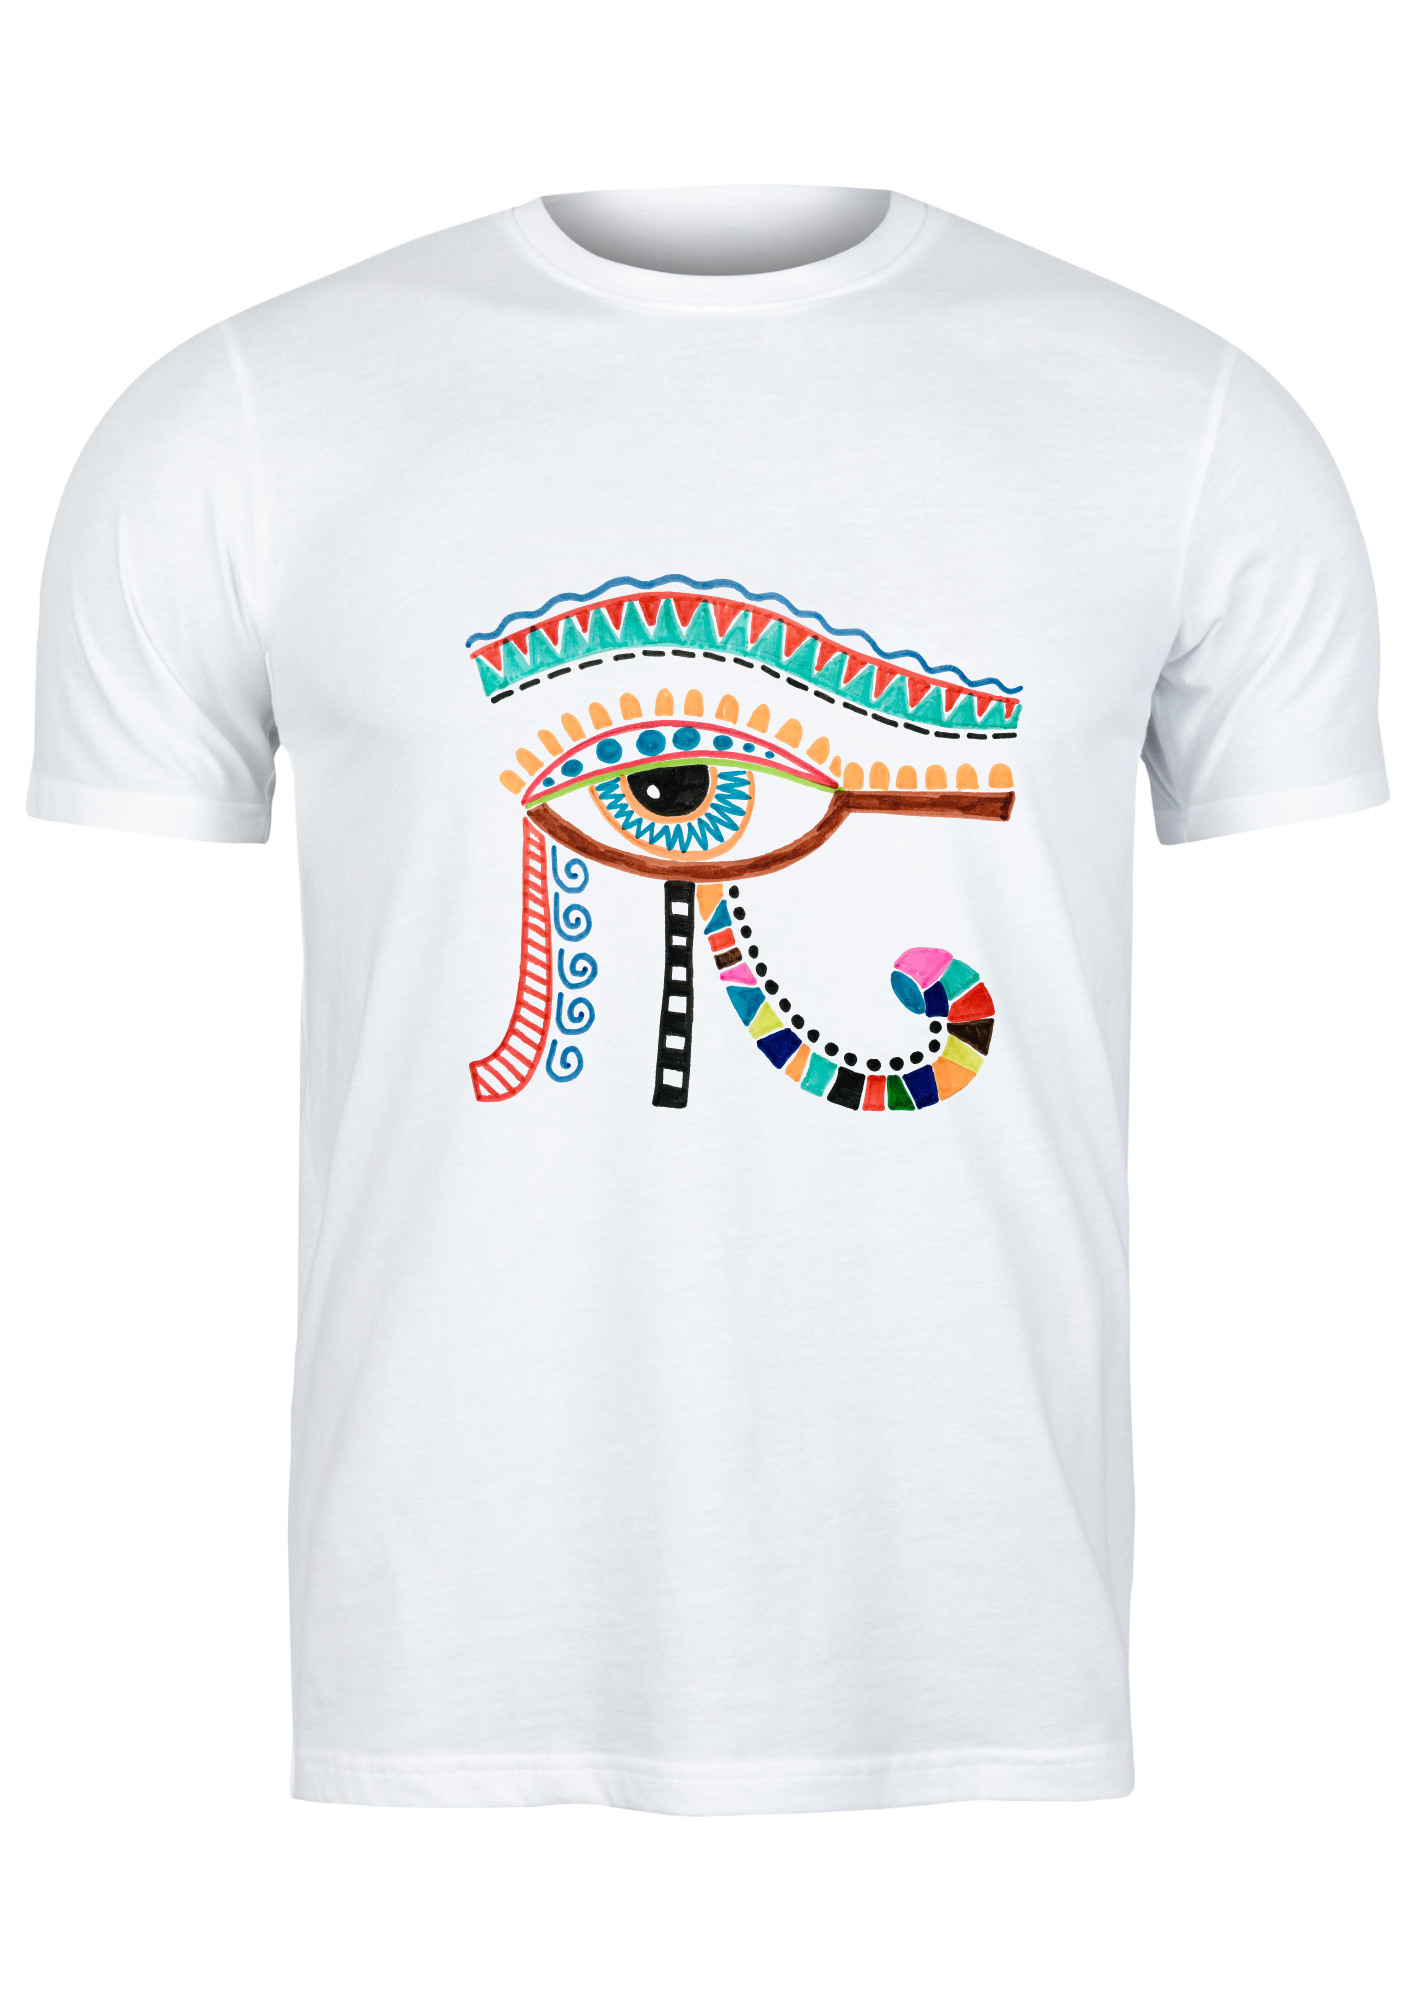 Unisex T Shirt Printed Colorful Eye of Horus